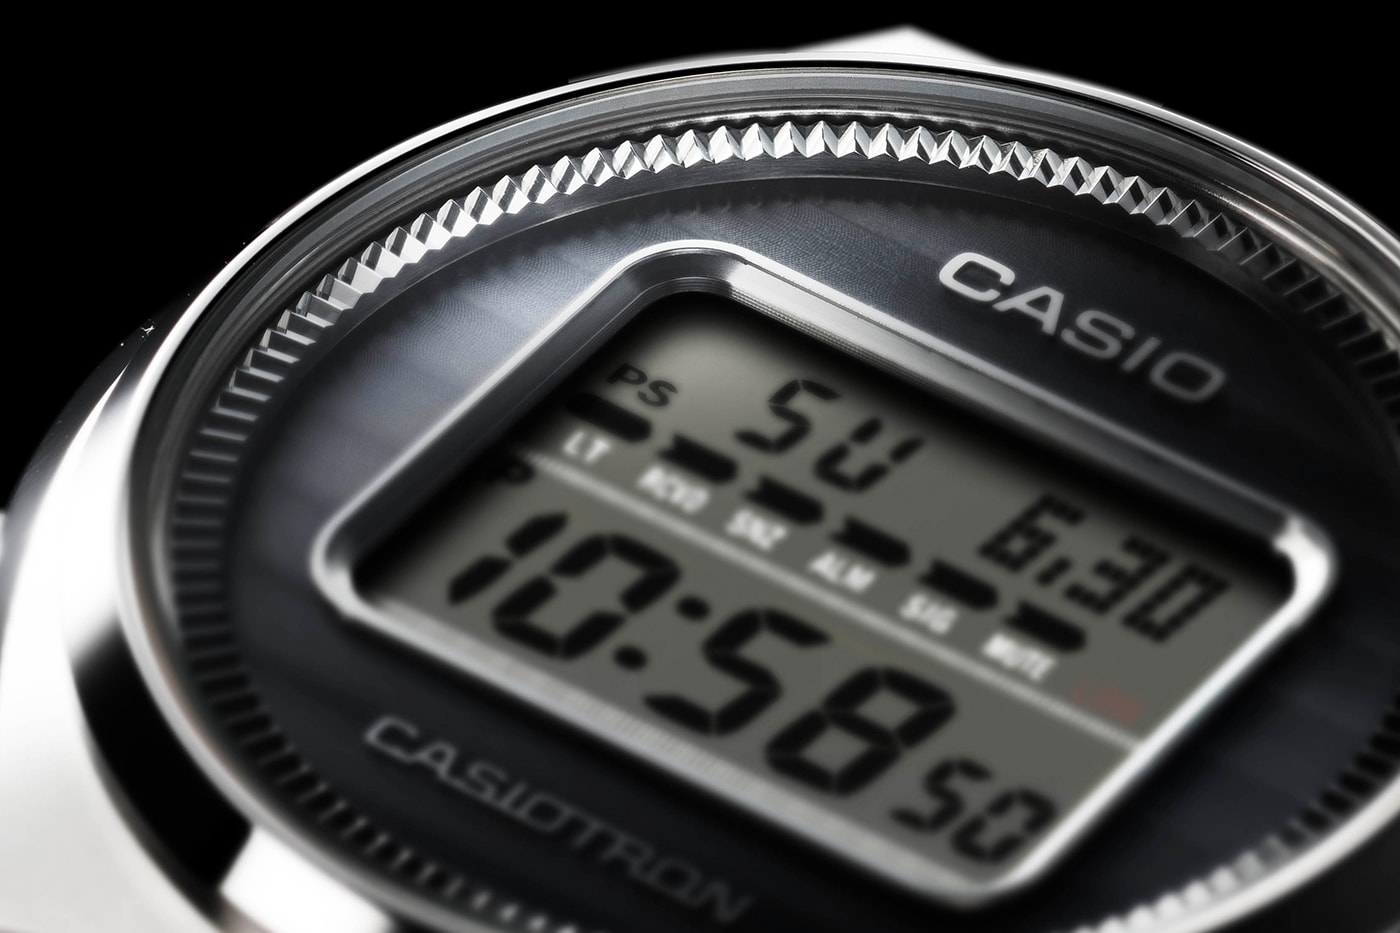 Casio 推出限量 4,000 枚全新復刻版 Casiotron 錶款